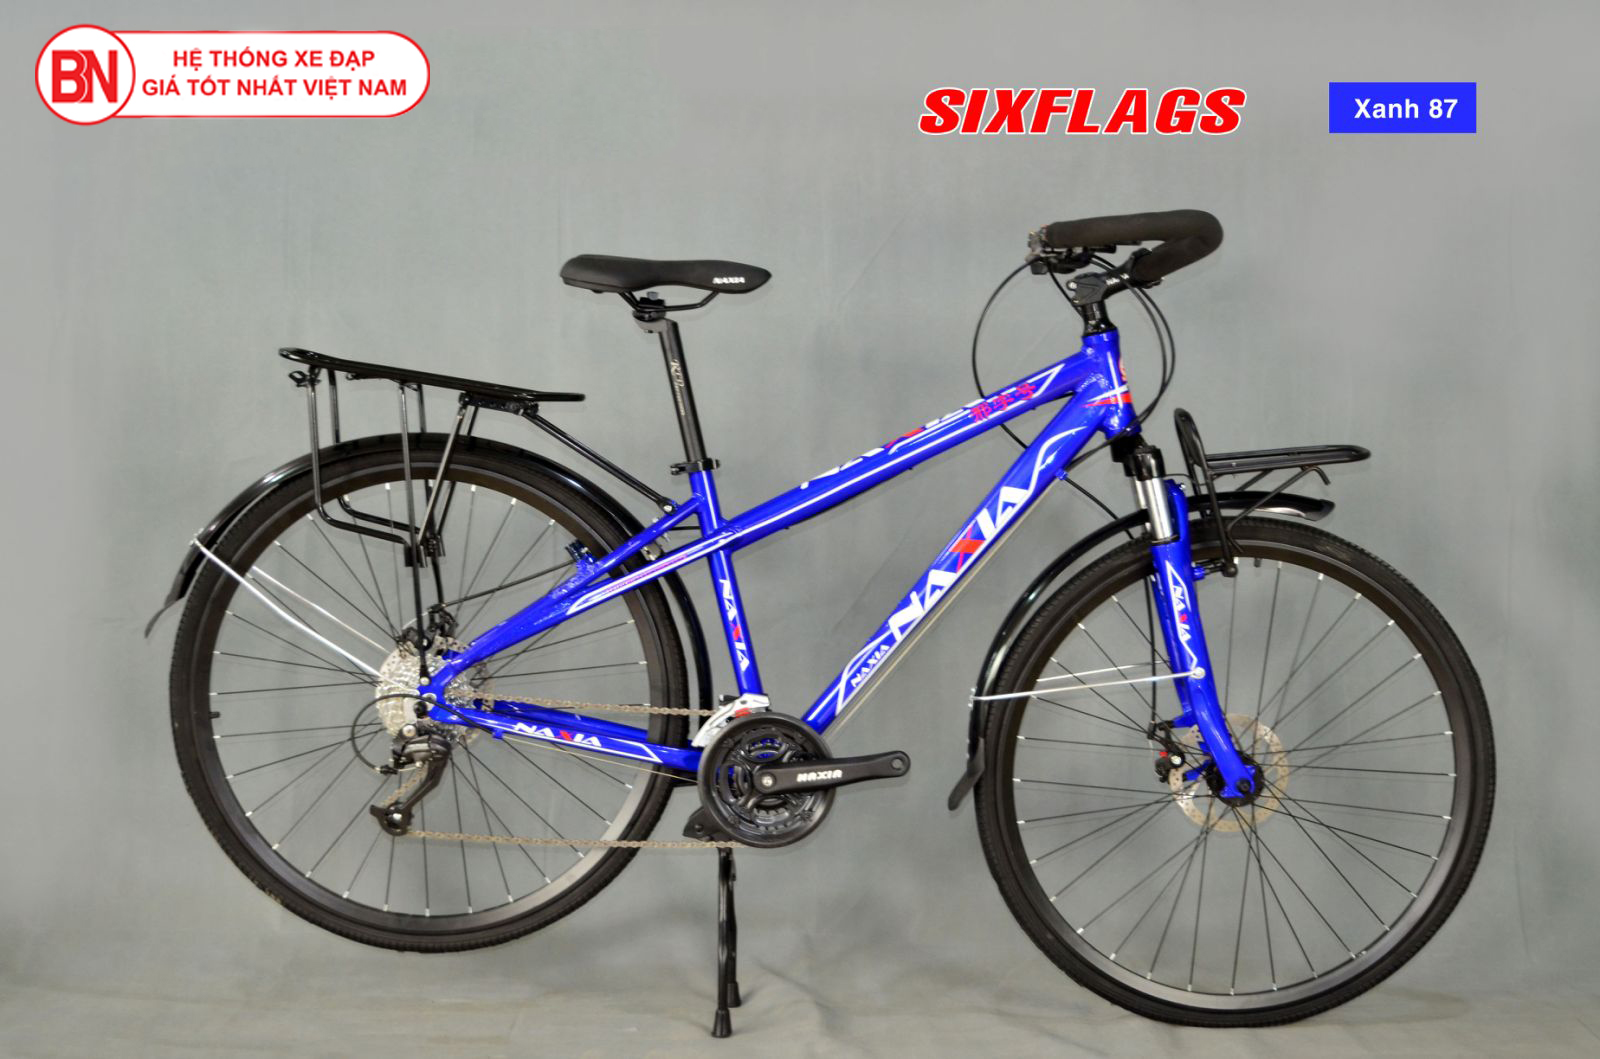 Xe đạp Sixflags Conque 1.0 màu xanh